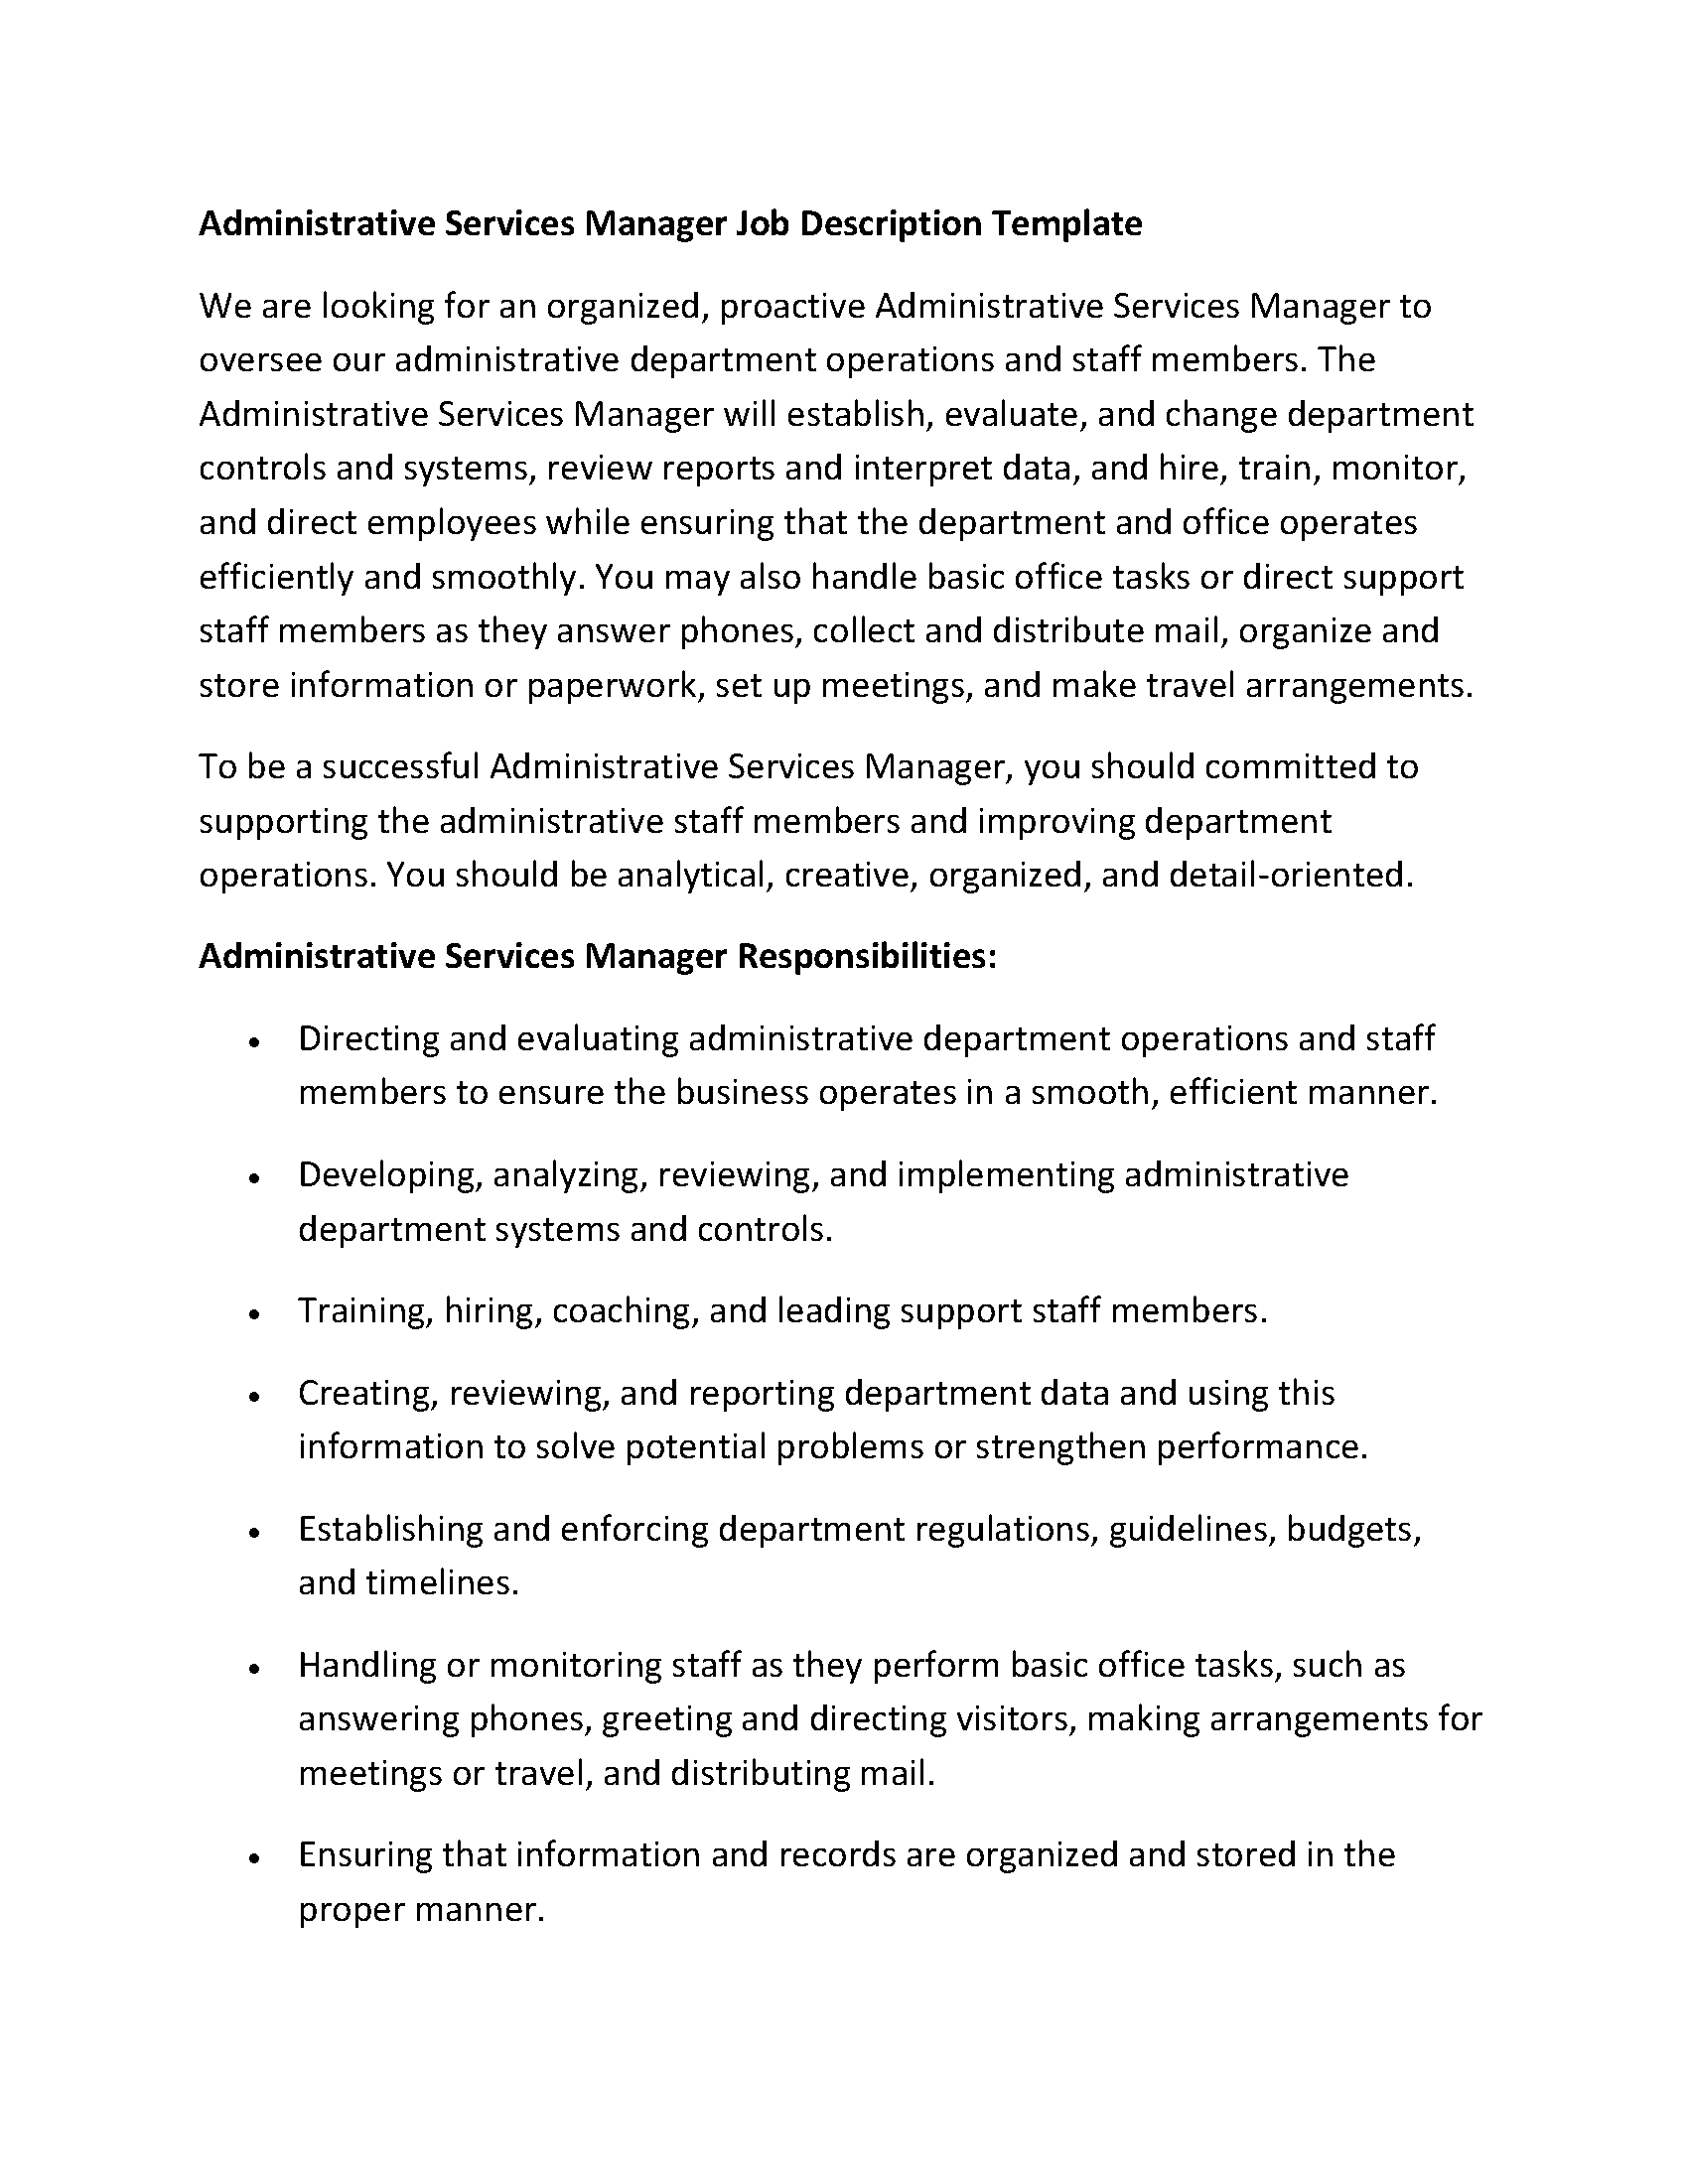 Administrative Services Manager Job Description Template